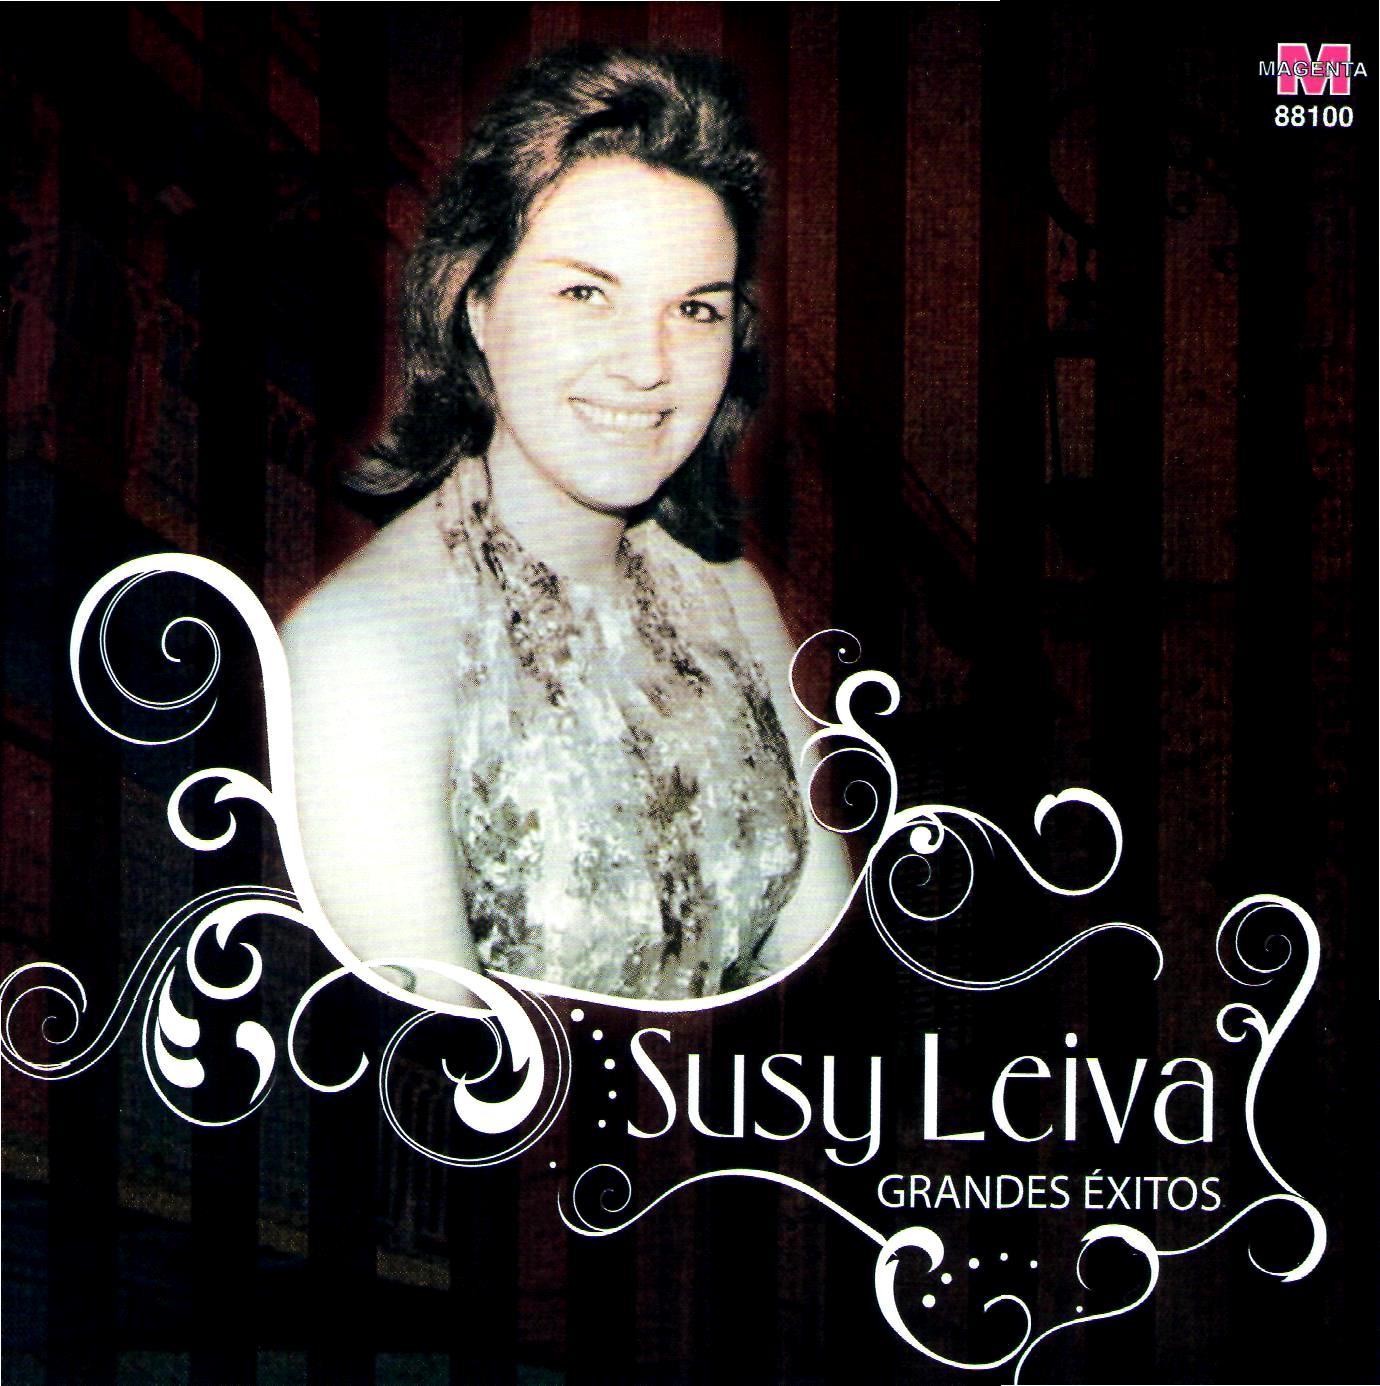 Susy Leiva